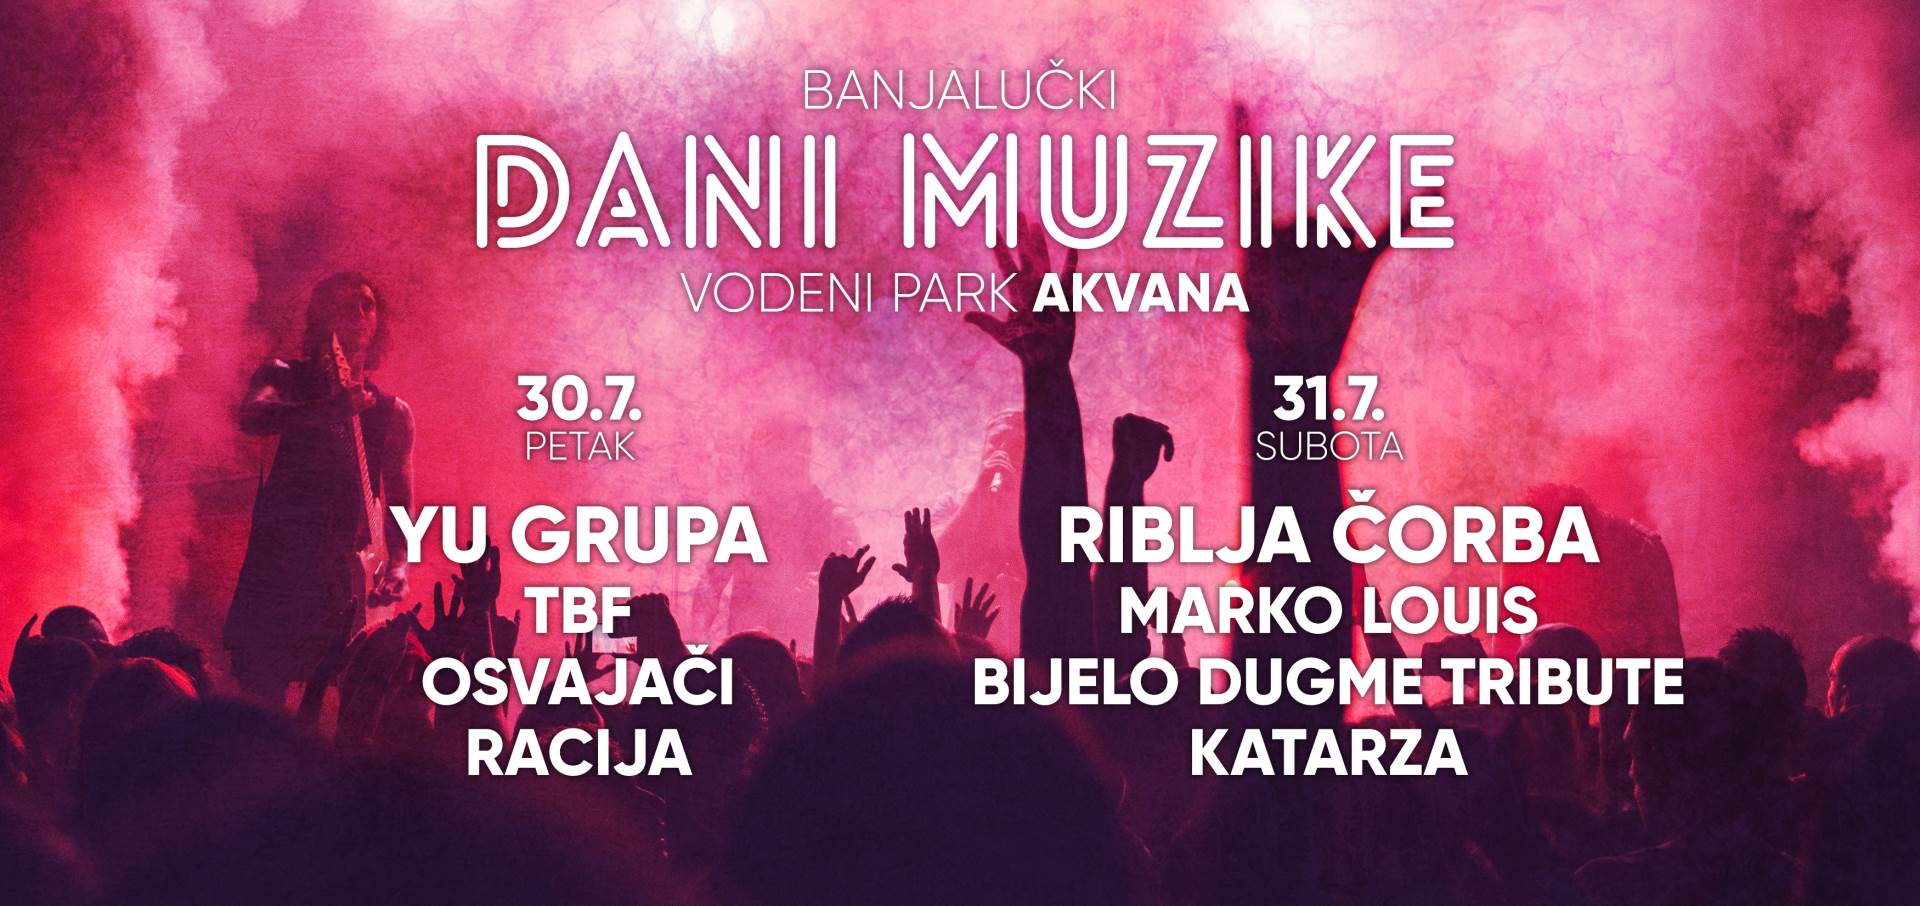   "Banjalučki dani muzike"  30 i 31. jula 